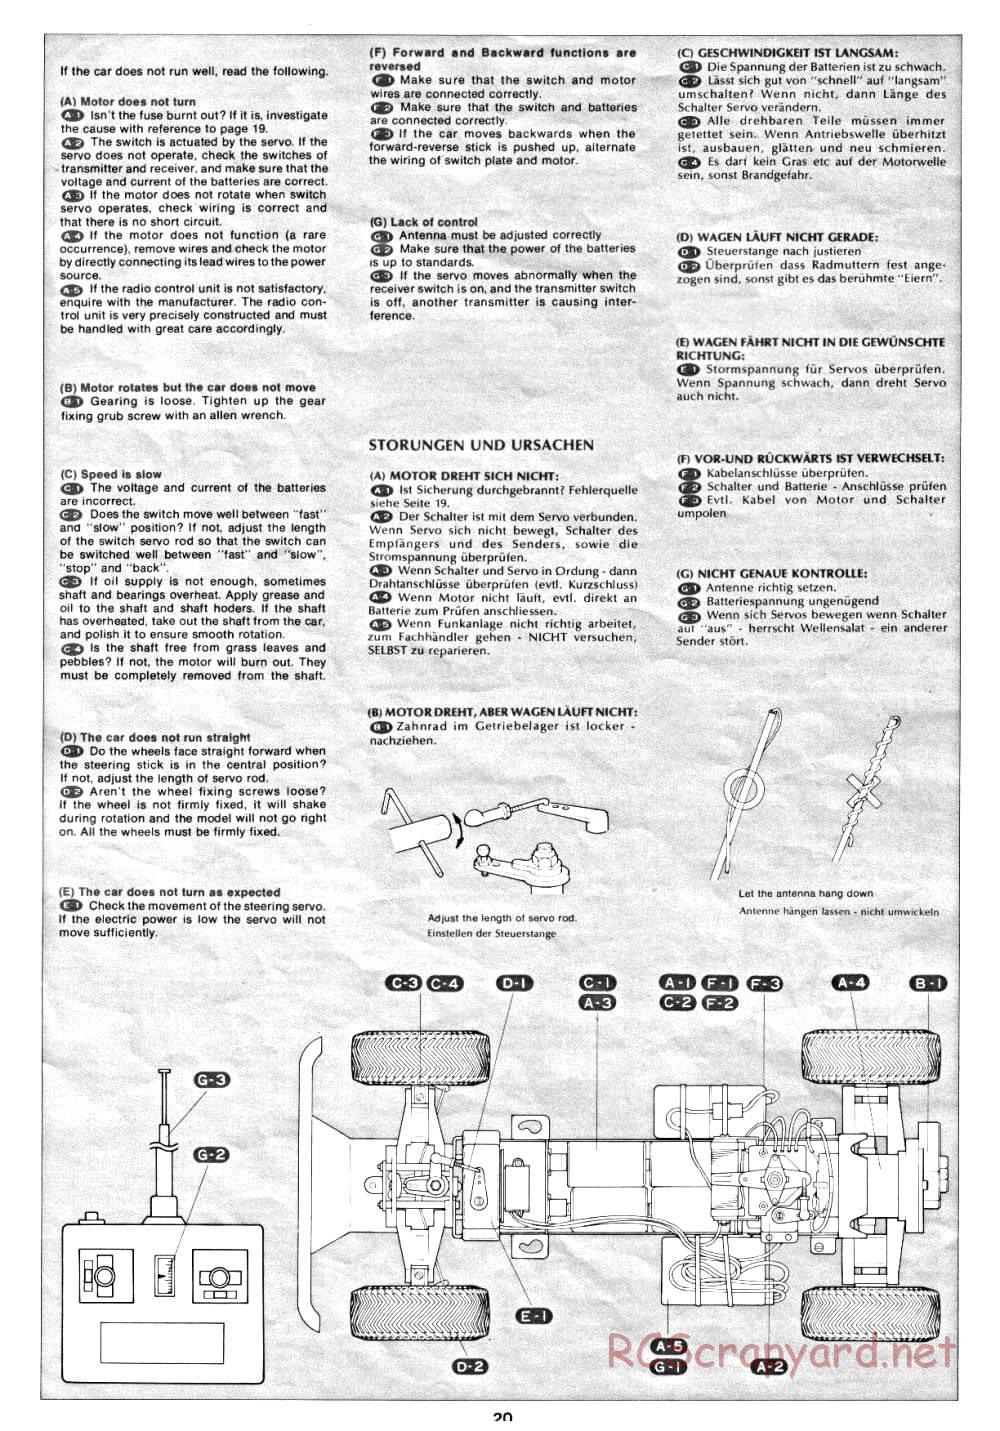 Tamiya - Lamborghini Cheetah - 58007 - Manual - Page 20